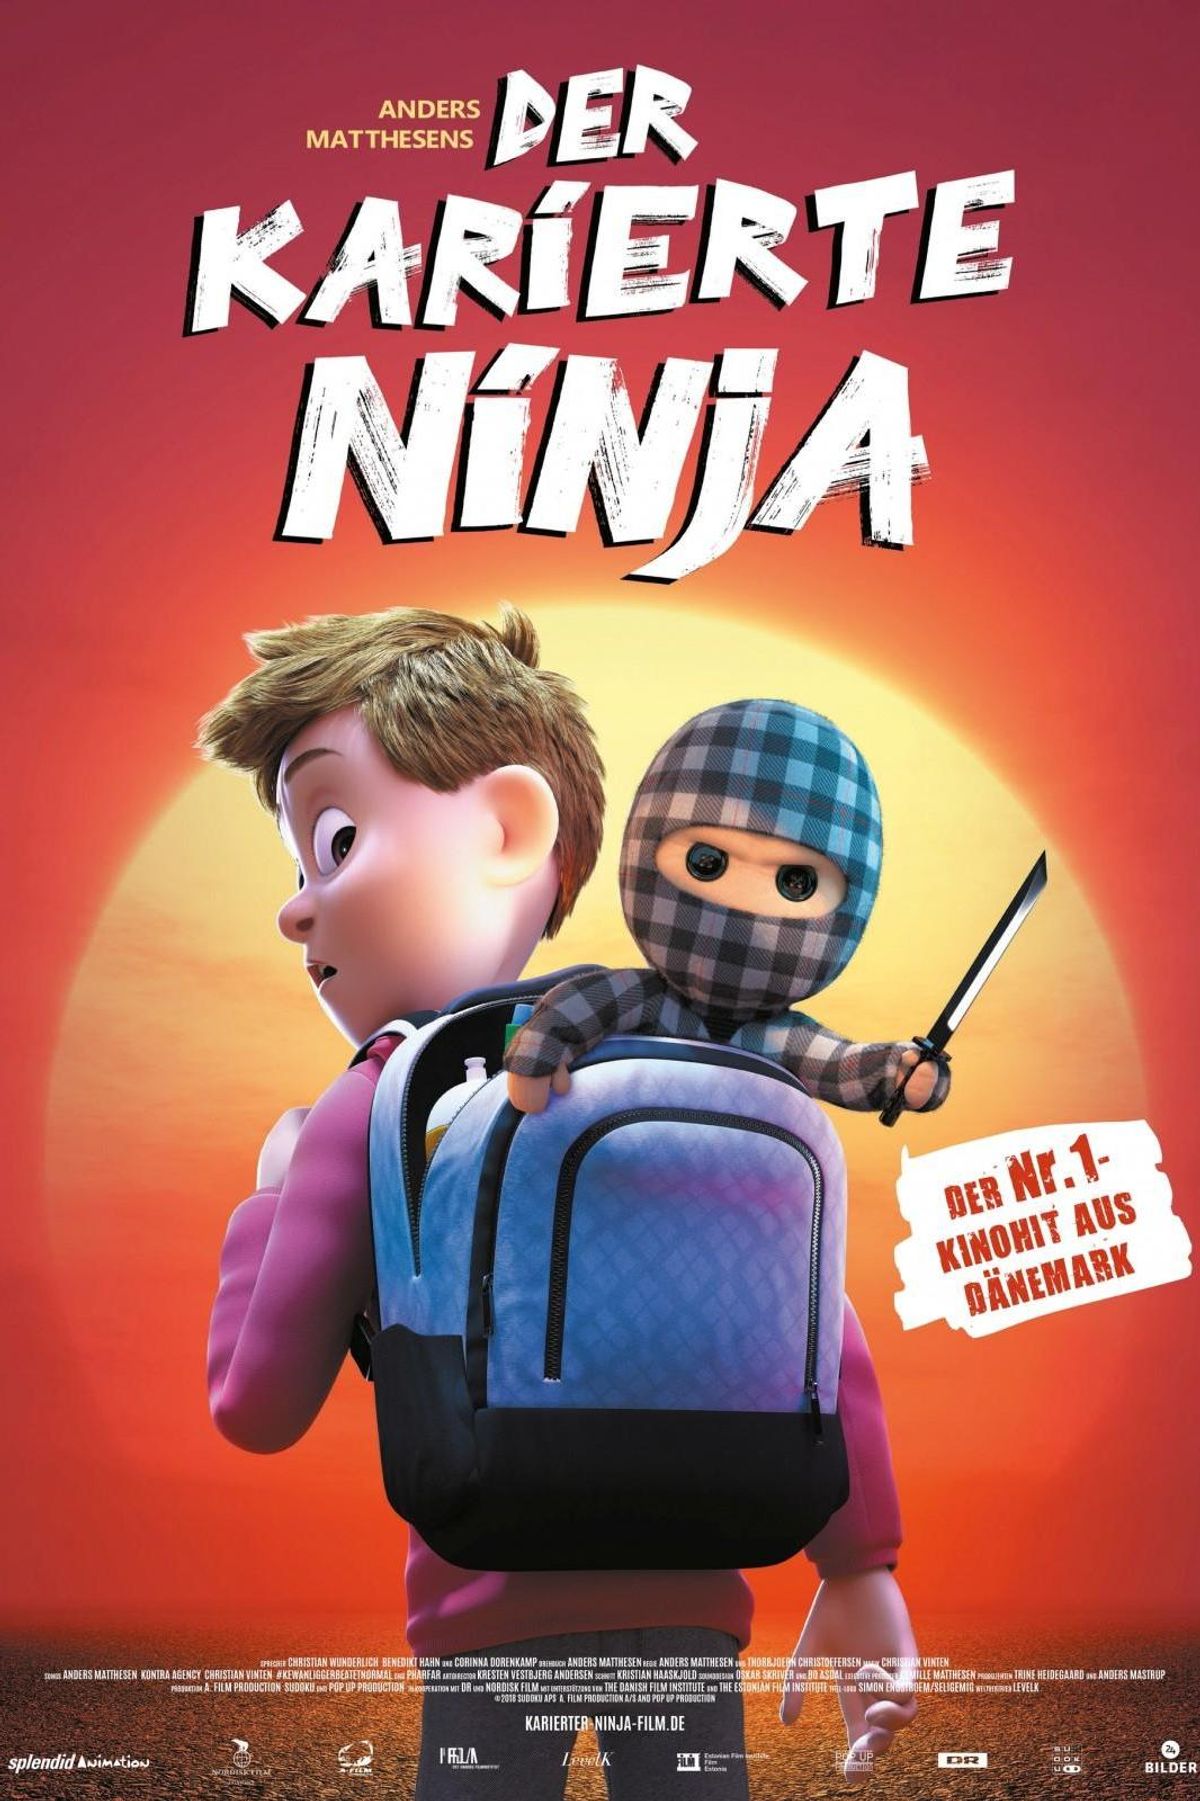 Checkered Ninja Movie Information & Trailers